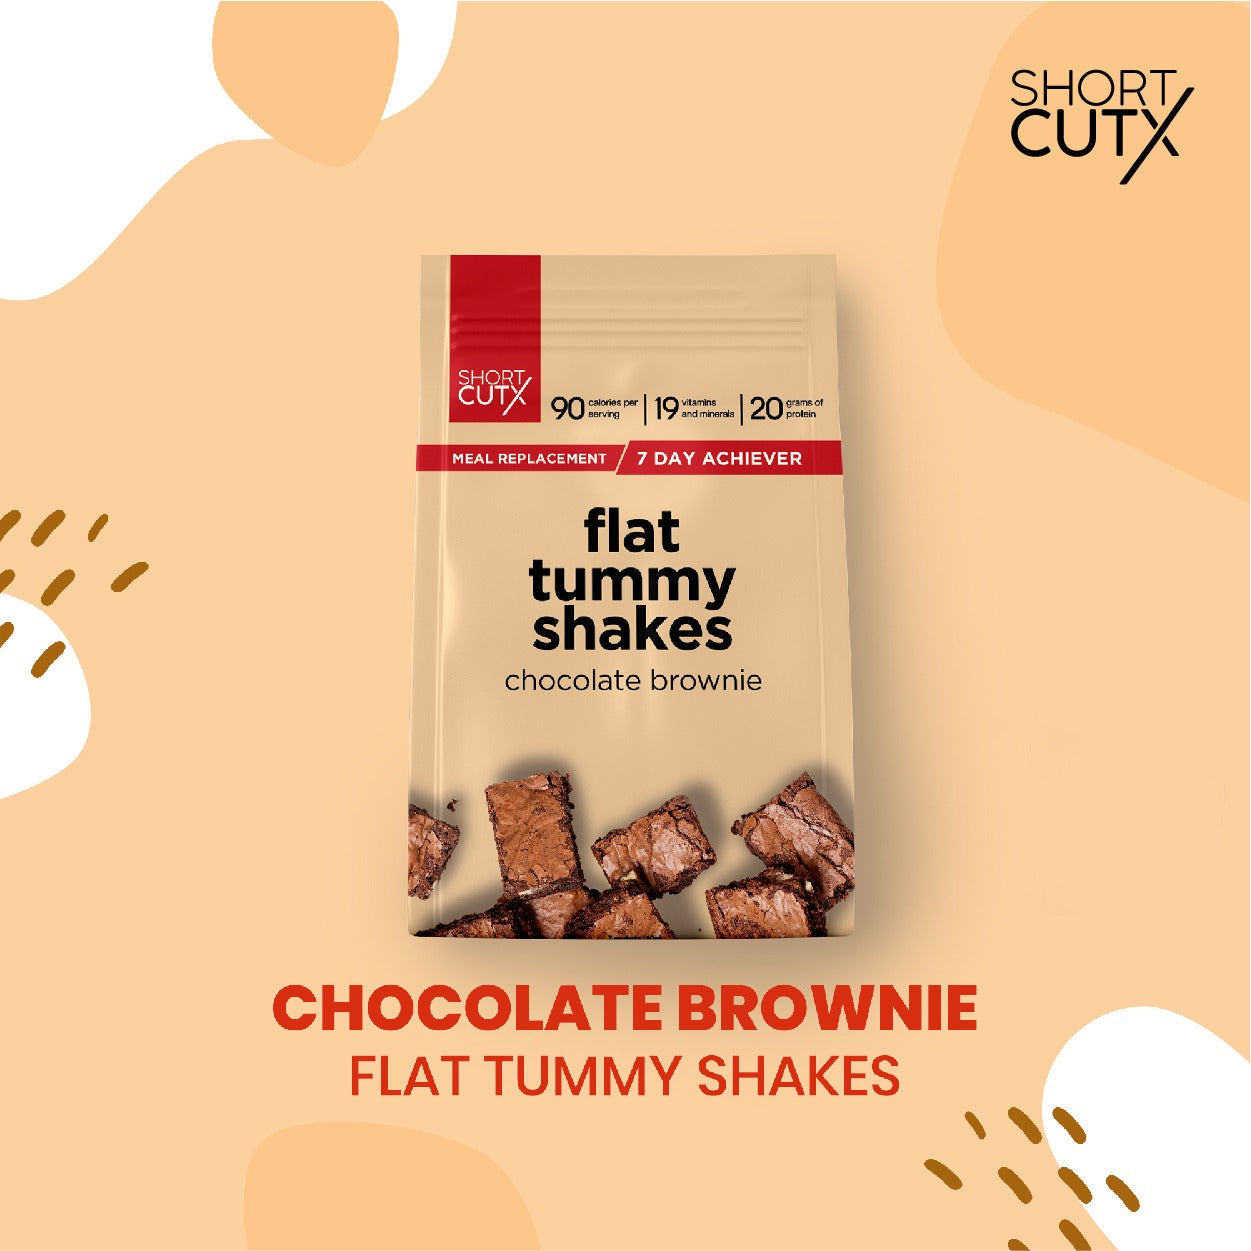 Shortcutx Flat Tummy Shakes - Chocolate Brownie